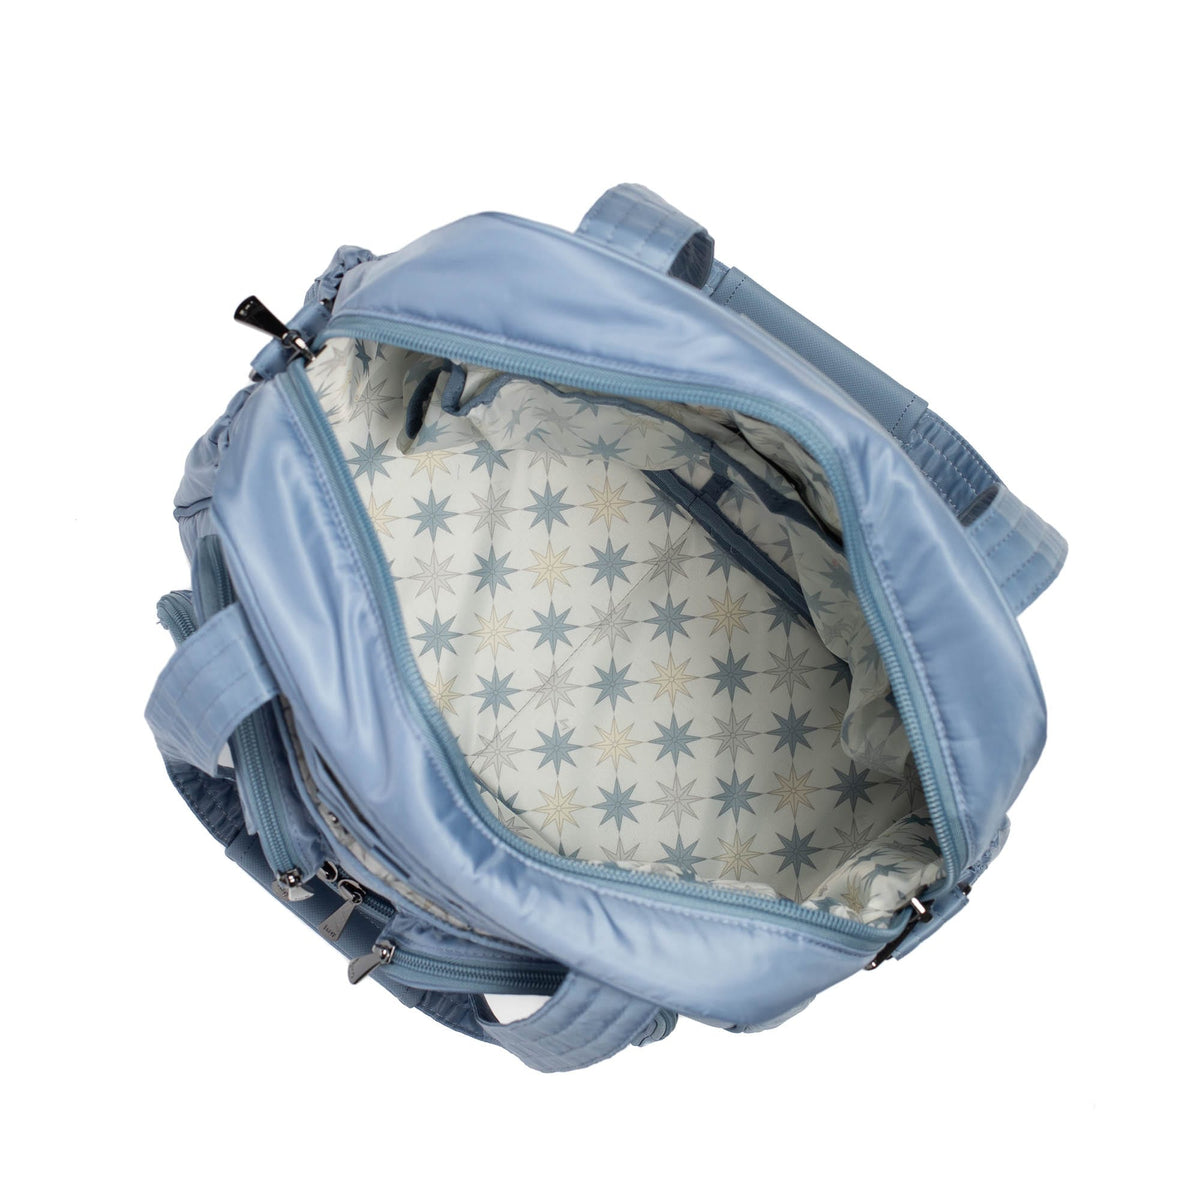 Puddle Jumper LE Convertible Tote Bag